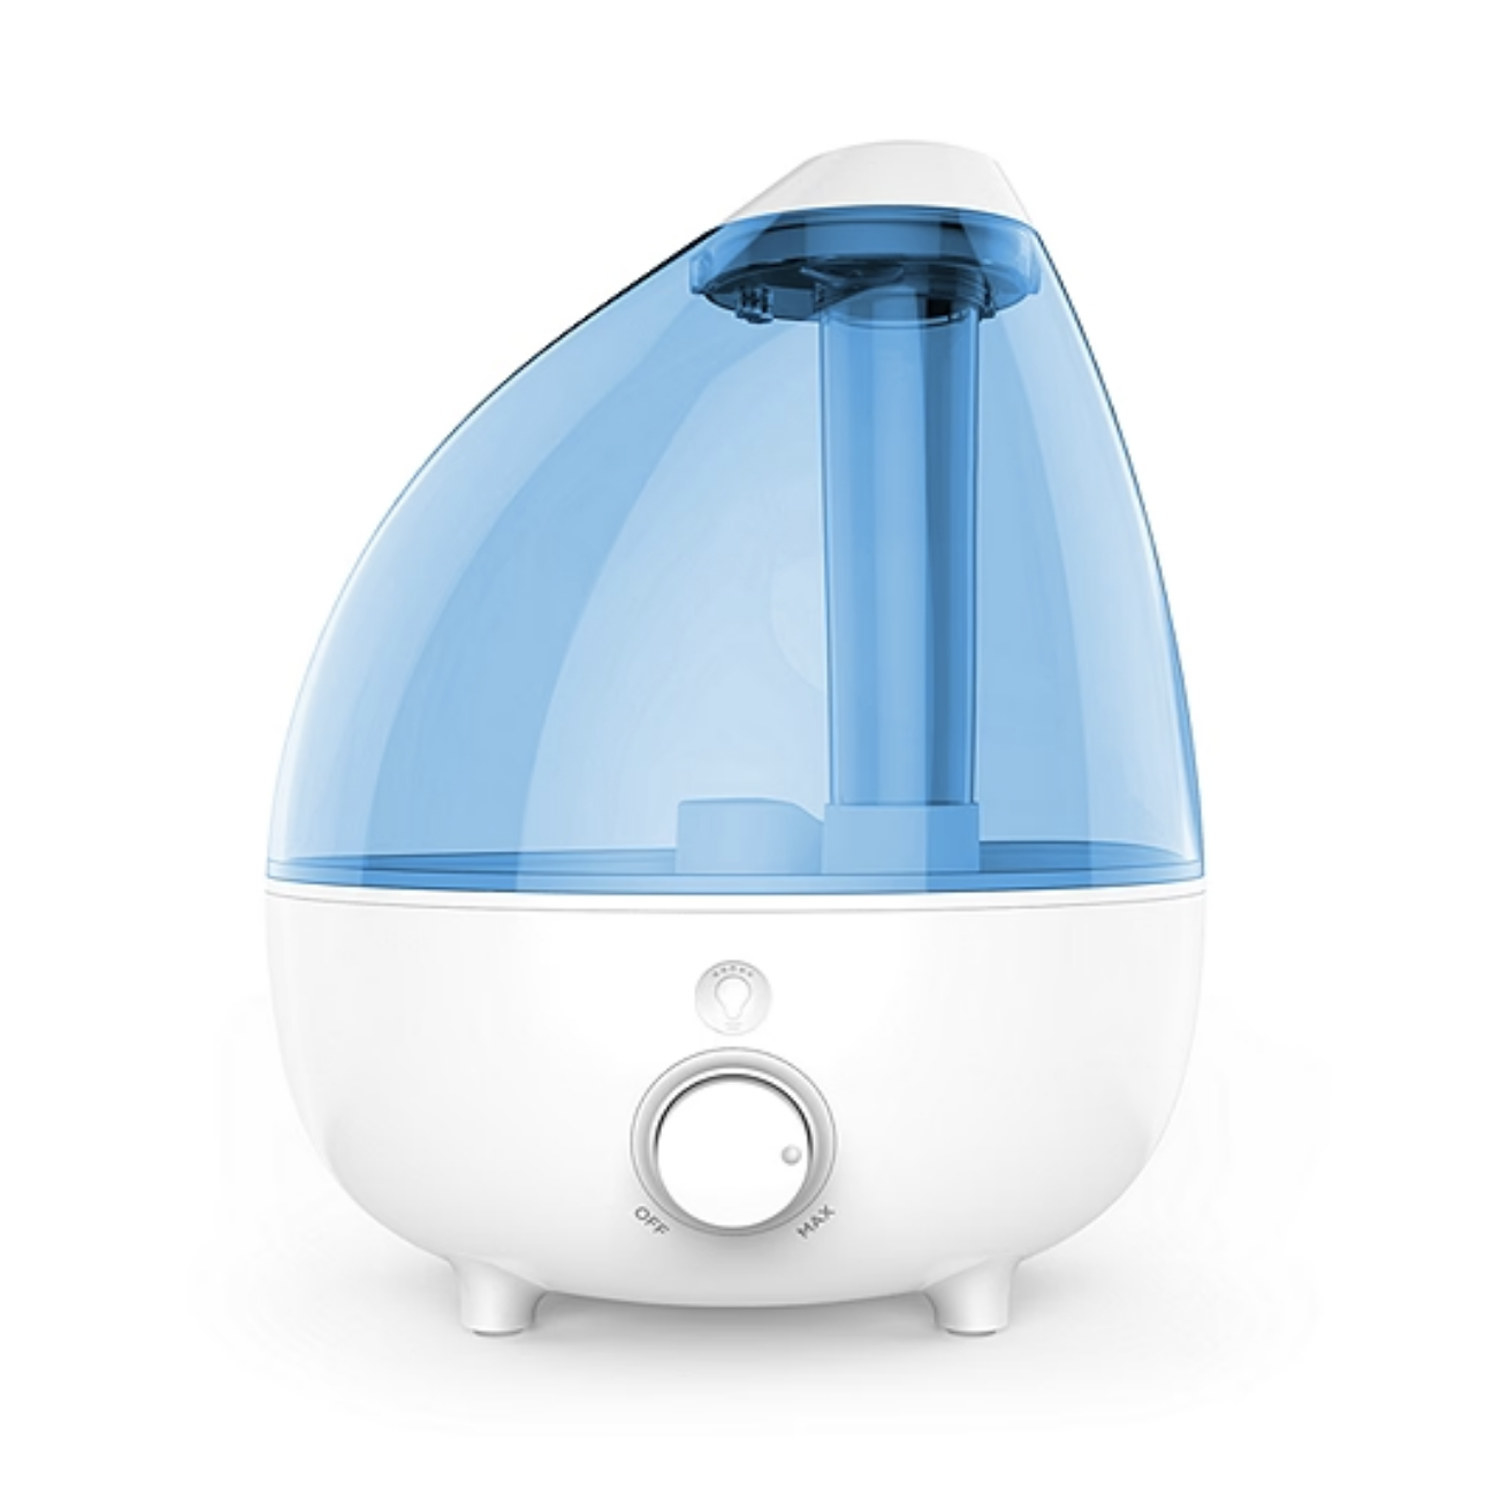 An image of a Pure Enrichment MistAire XL Ultrasonic Cool Mist Humidifier, an oblong white device with a transparent light blue encasement